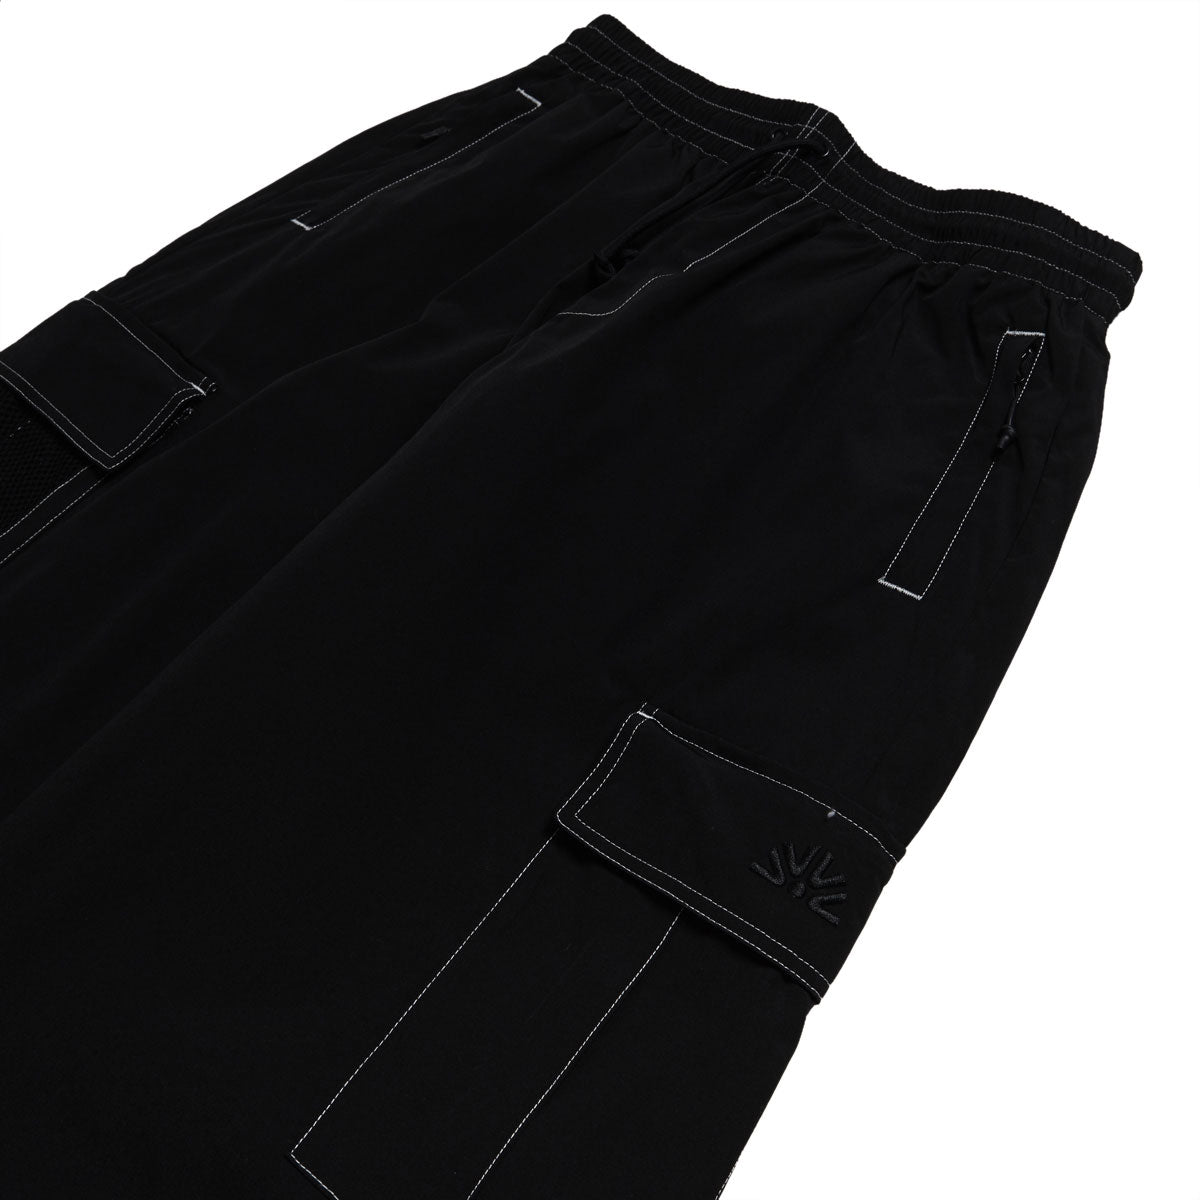 Autumn Cascade Cargo Pants - Black image 2